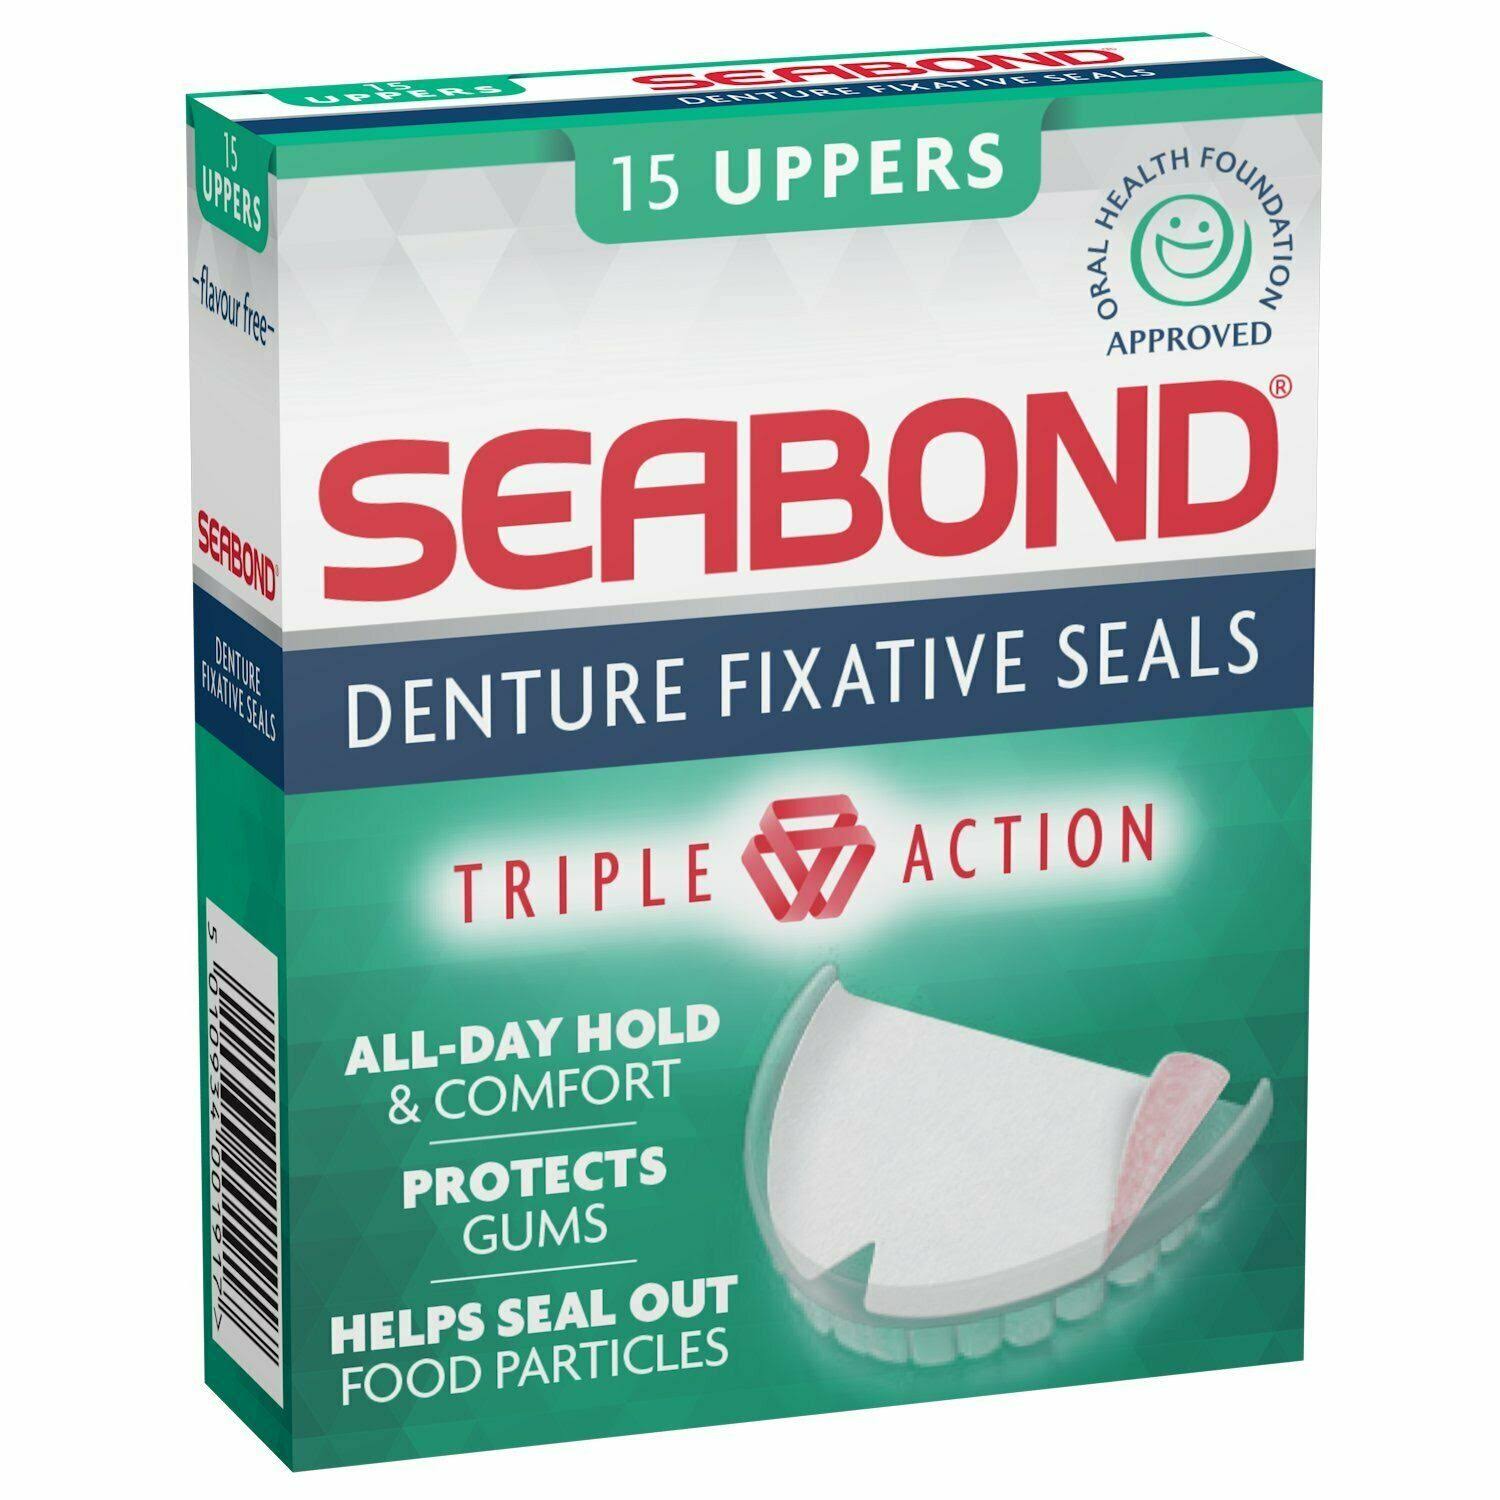 Seabond Denture Fixative Seals - 15 Uppers